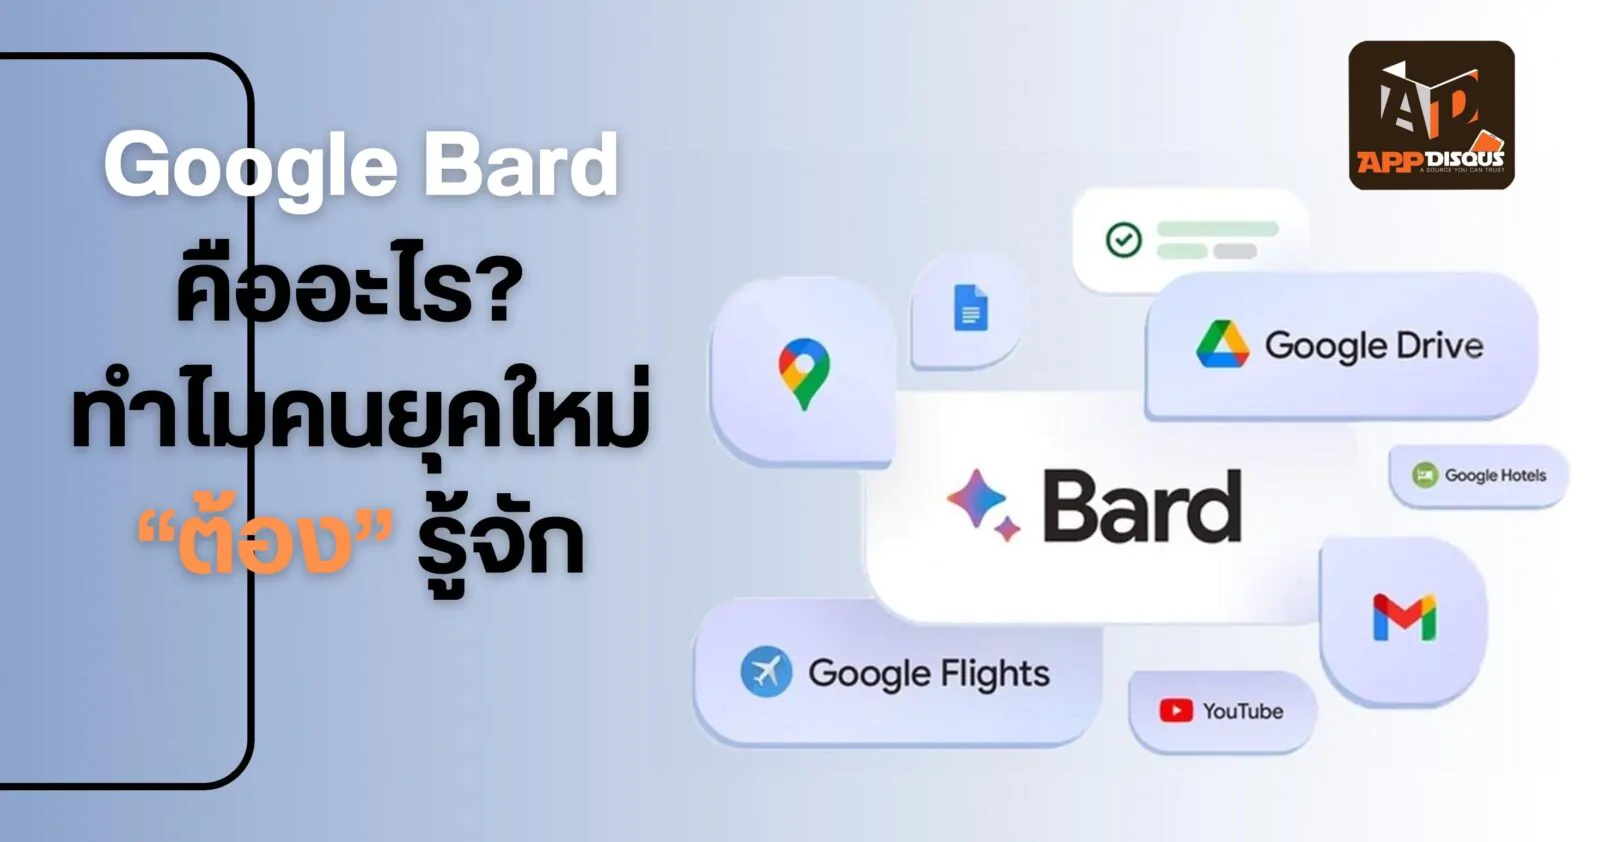 Google bard ai 1 | AI | Google Bard คืออะไร? ทำไมคนยุคใหม่ “ต้อง”รู้จัก